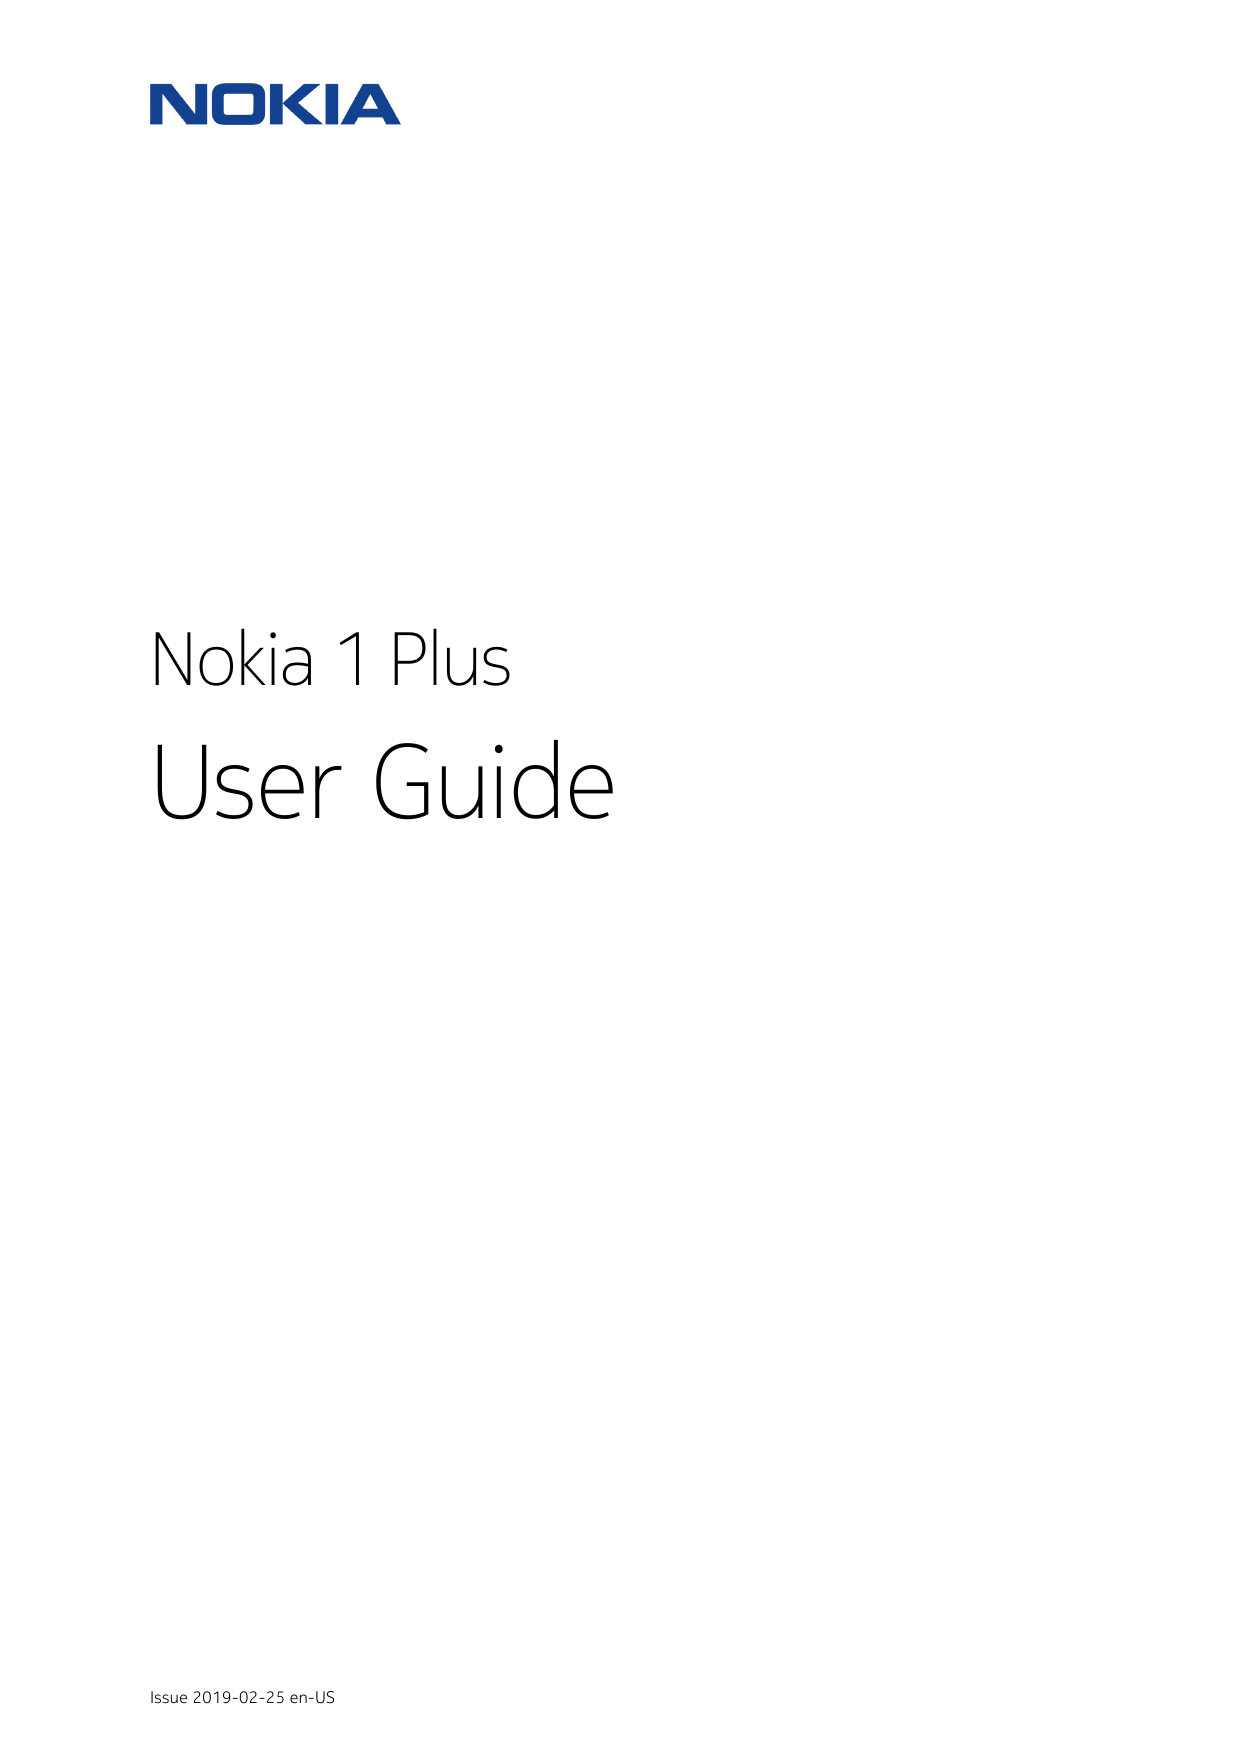 Nokia 1 PlusUser GuideIssue 2019-02-25 en-US